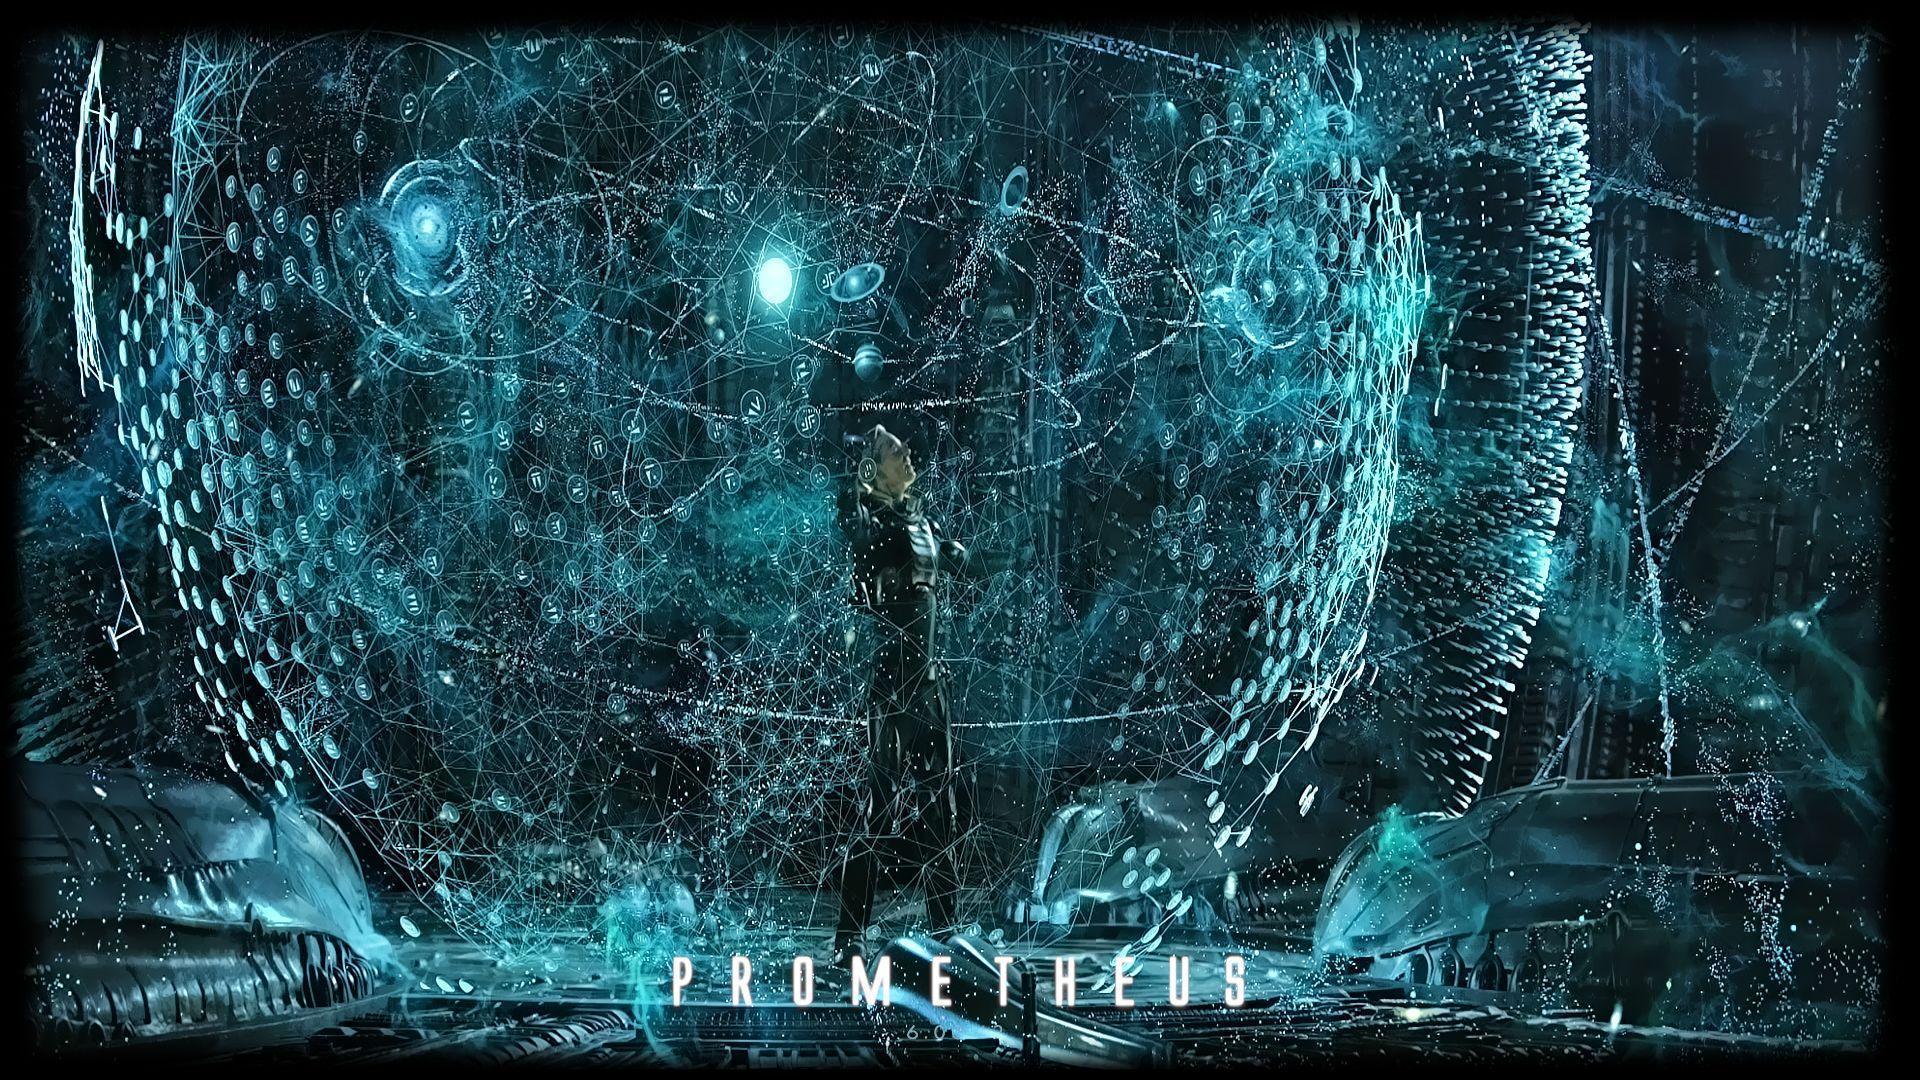 HD Wallpaper from Prometheus